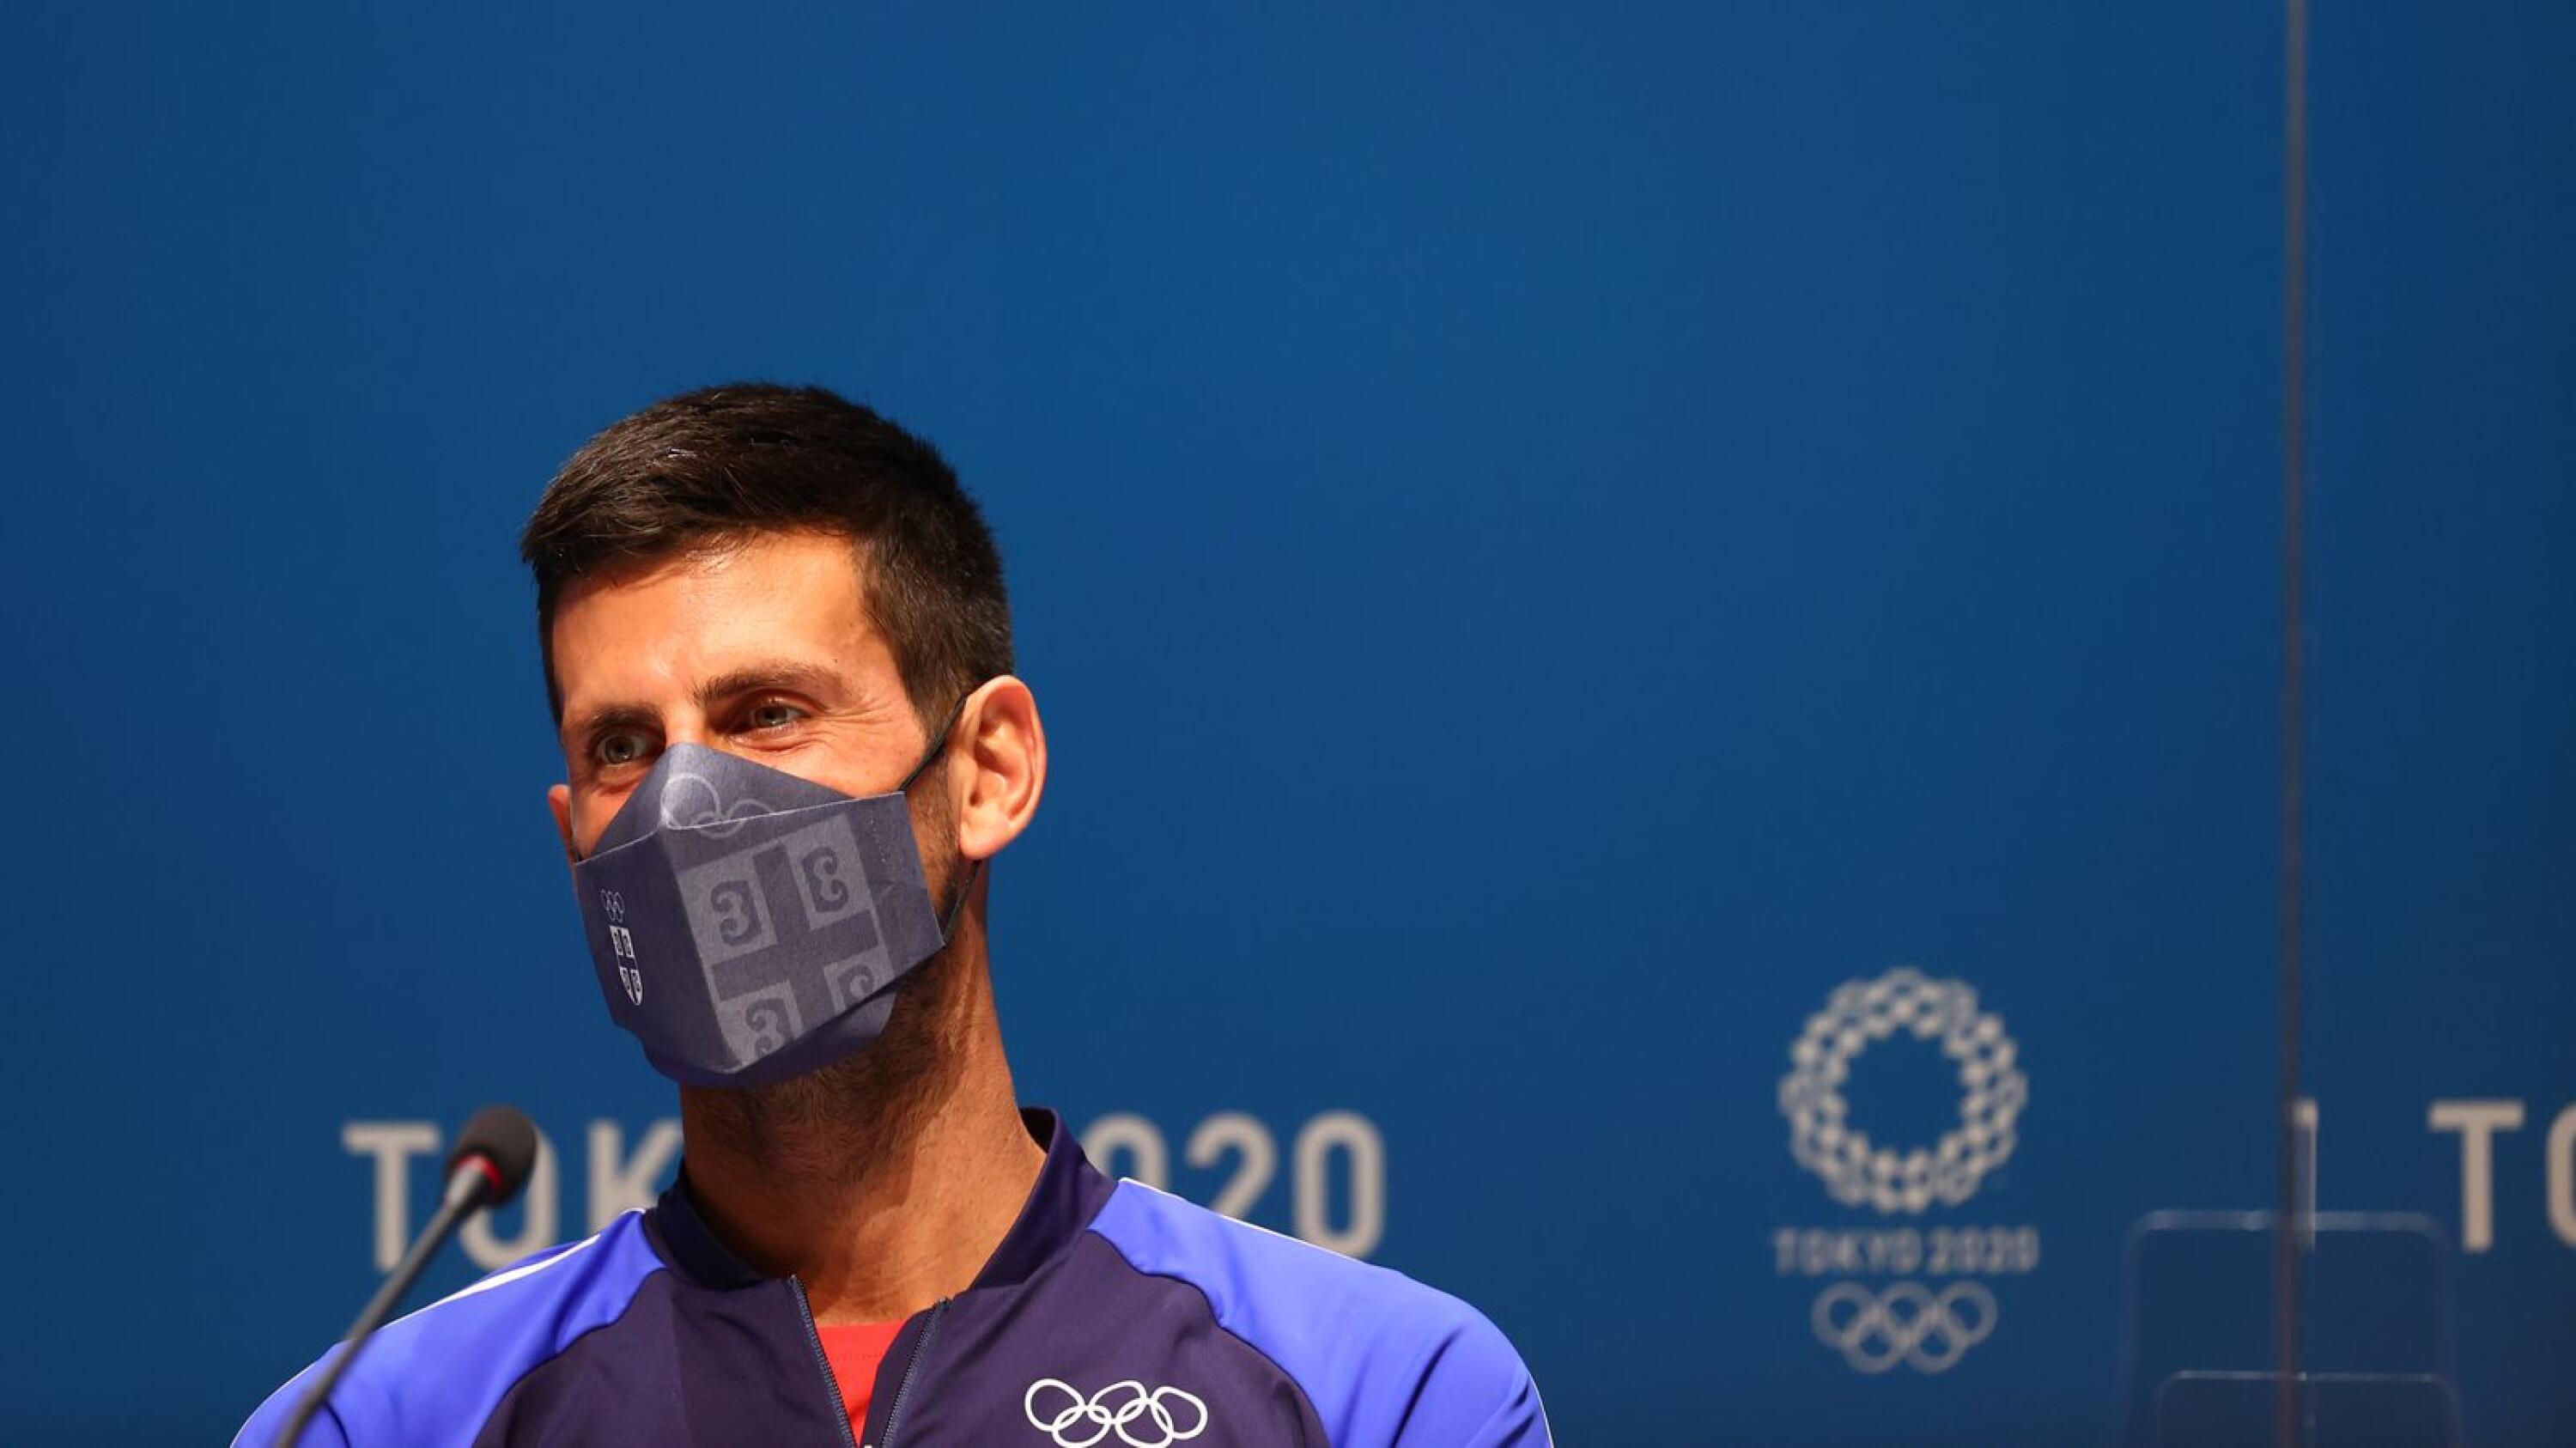 Novak Djokovic of Serbia speaks during a press conference